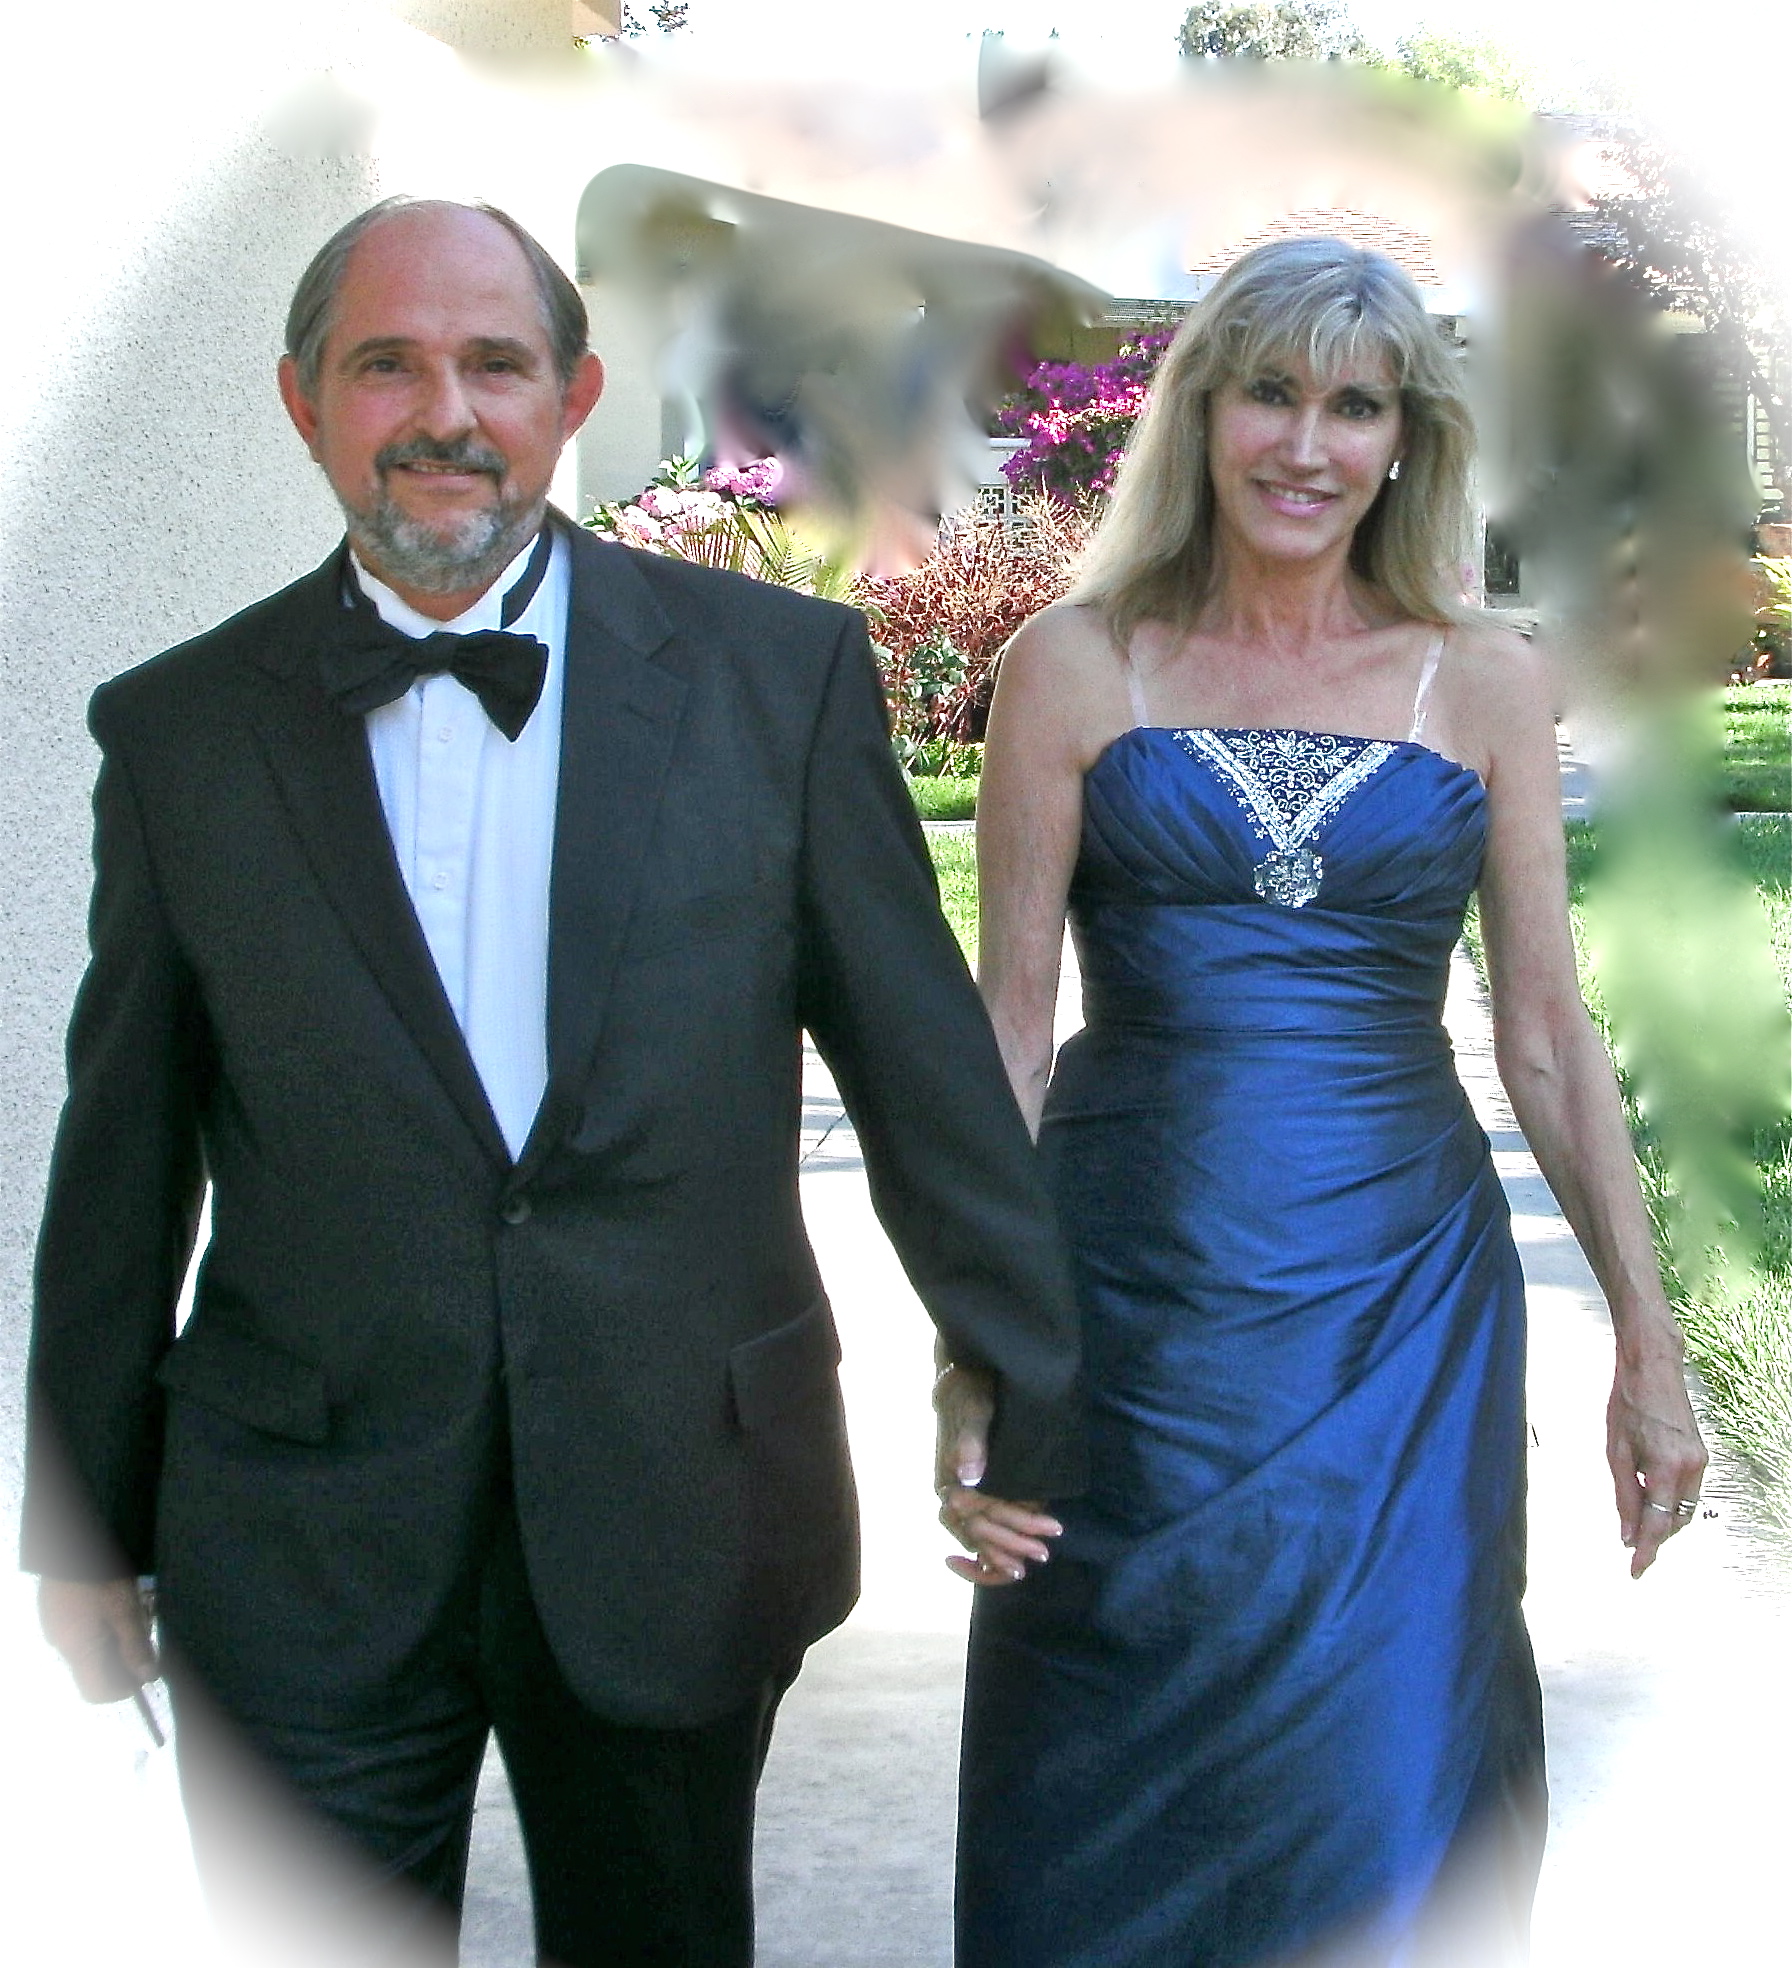 Gordon with wife and co-star of BIFOCALS, Barbara Rich (AKA Ageless1der). They were on their way to shoot Academy Awards Bifocals show.